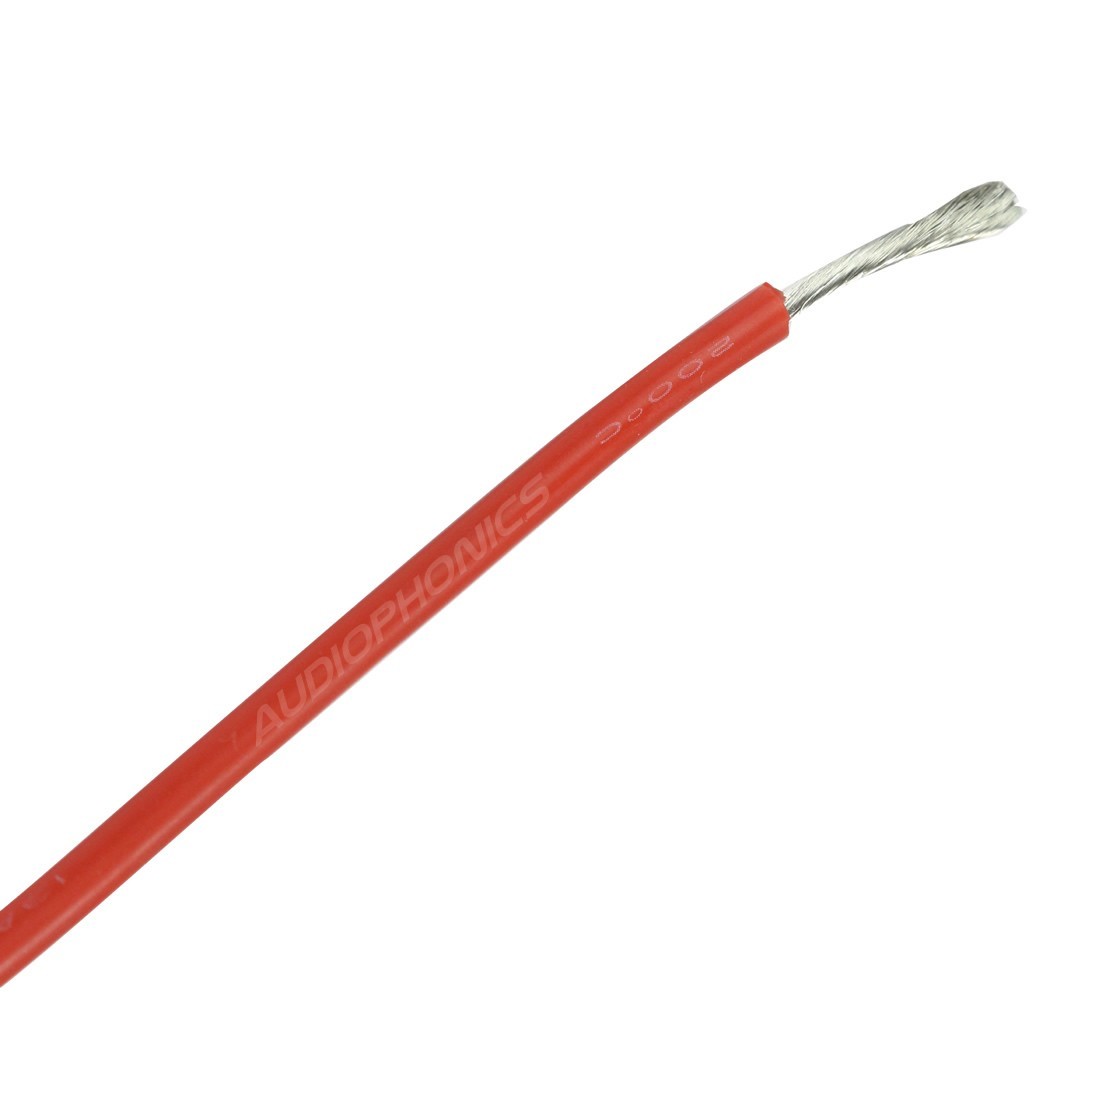 Fil de câblage multibrins silicone 16AWG 1.27mm² (Rouge)